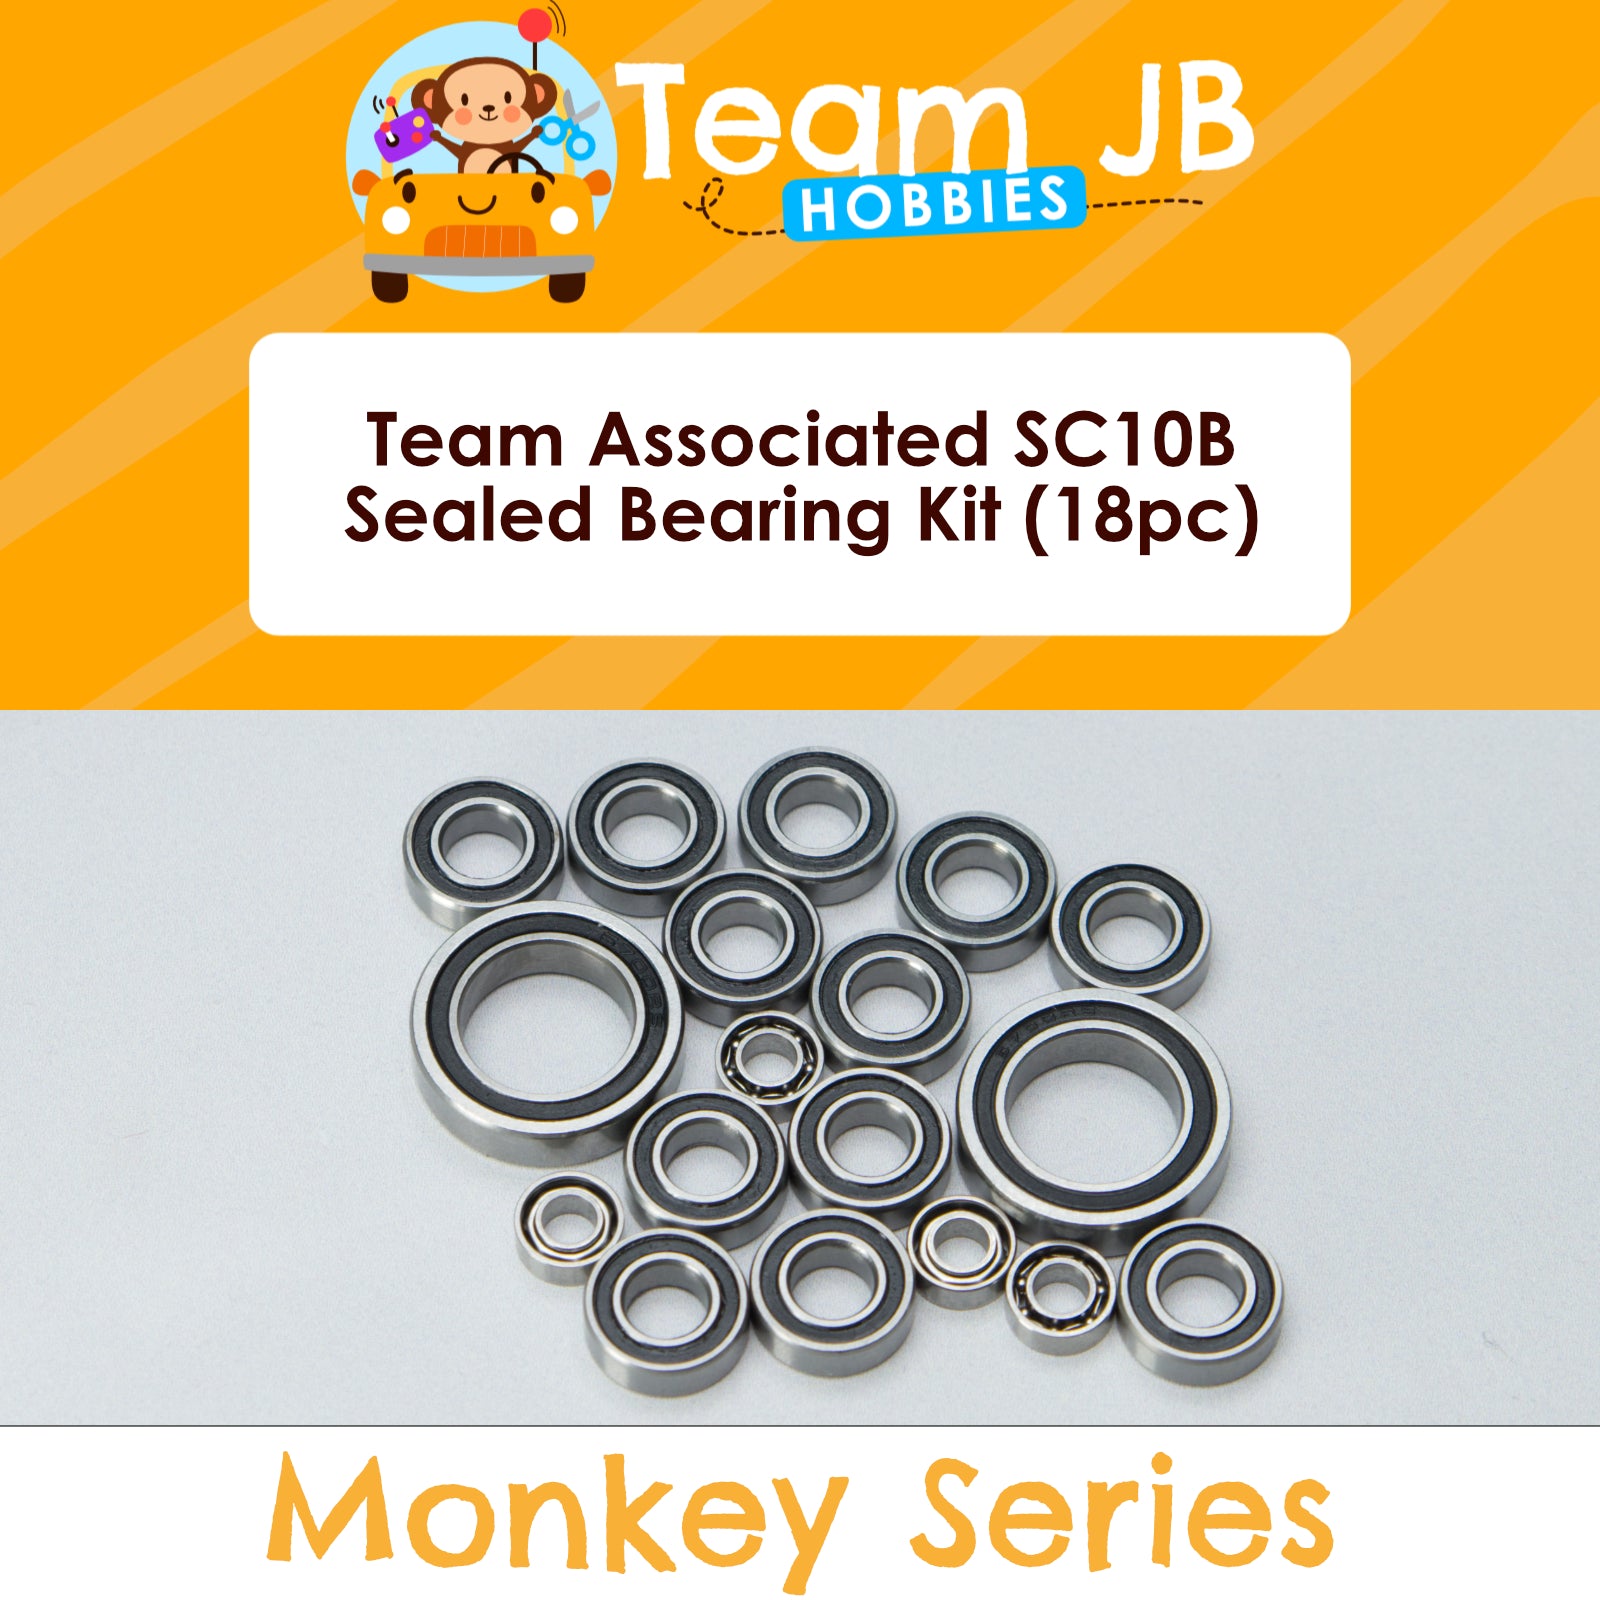 Team Associated SC10B - Sealed Bearing Kit